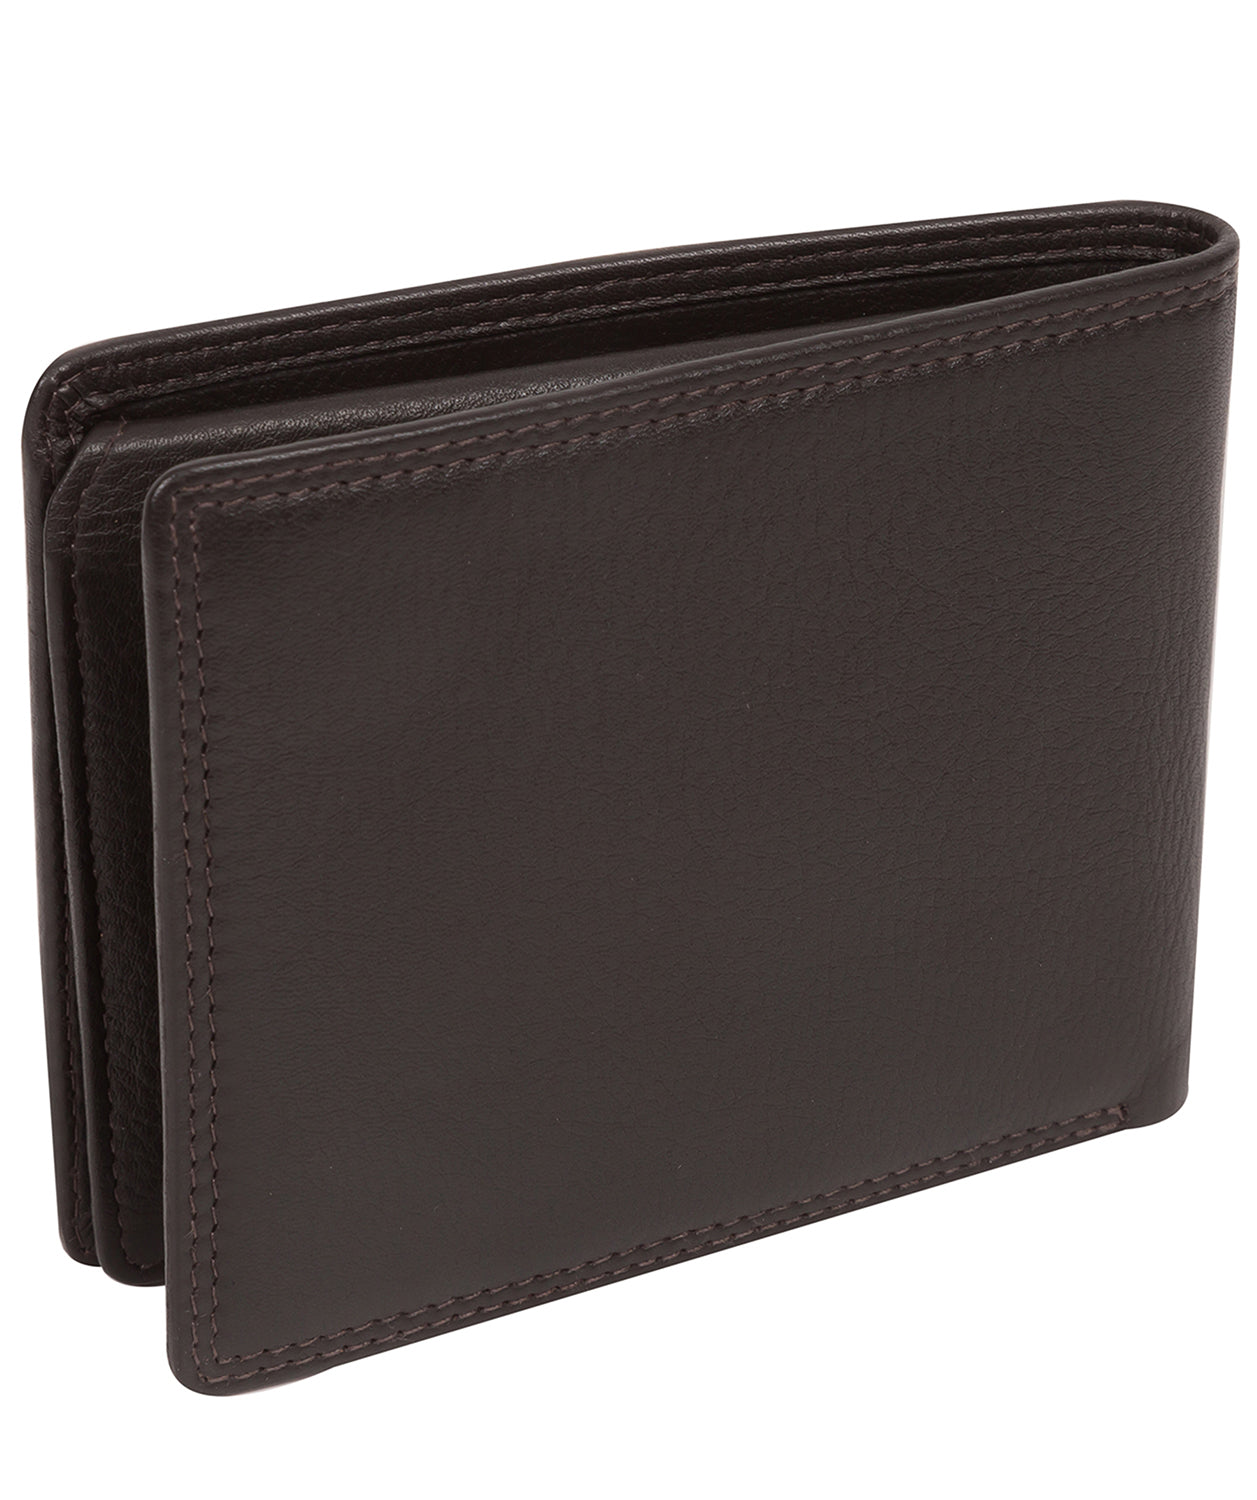 'Matt' Brown Leather Bi-Fold Wallet